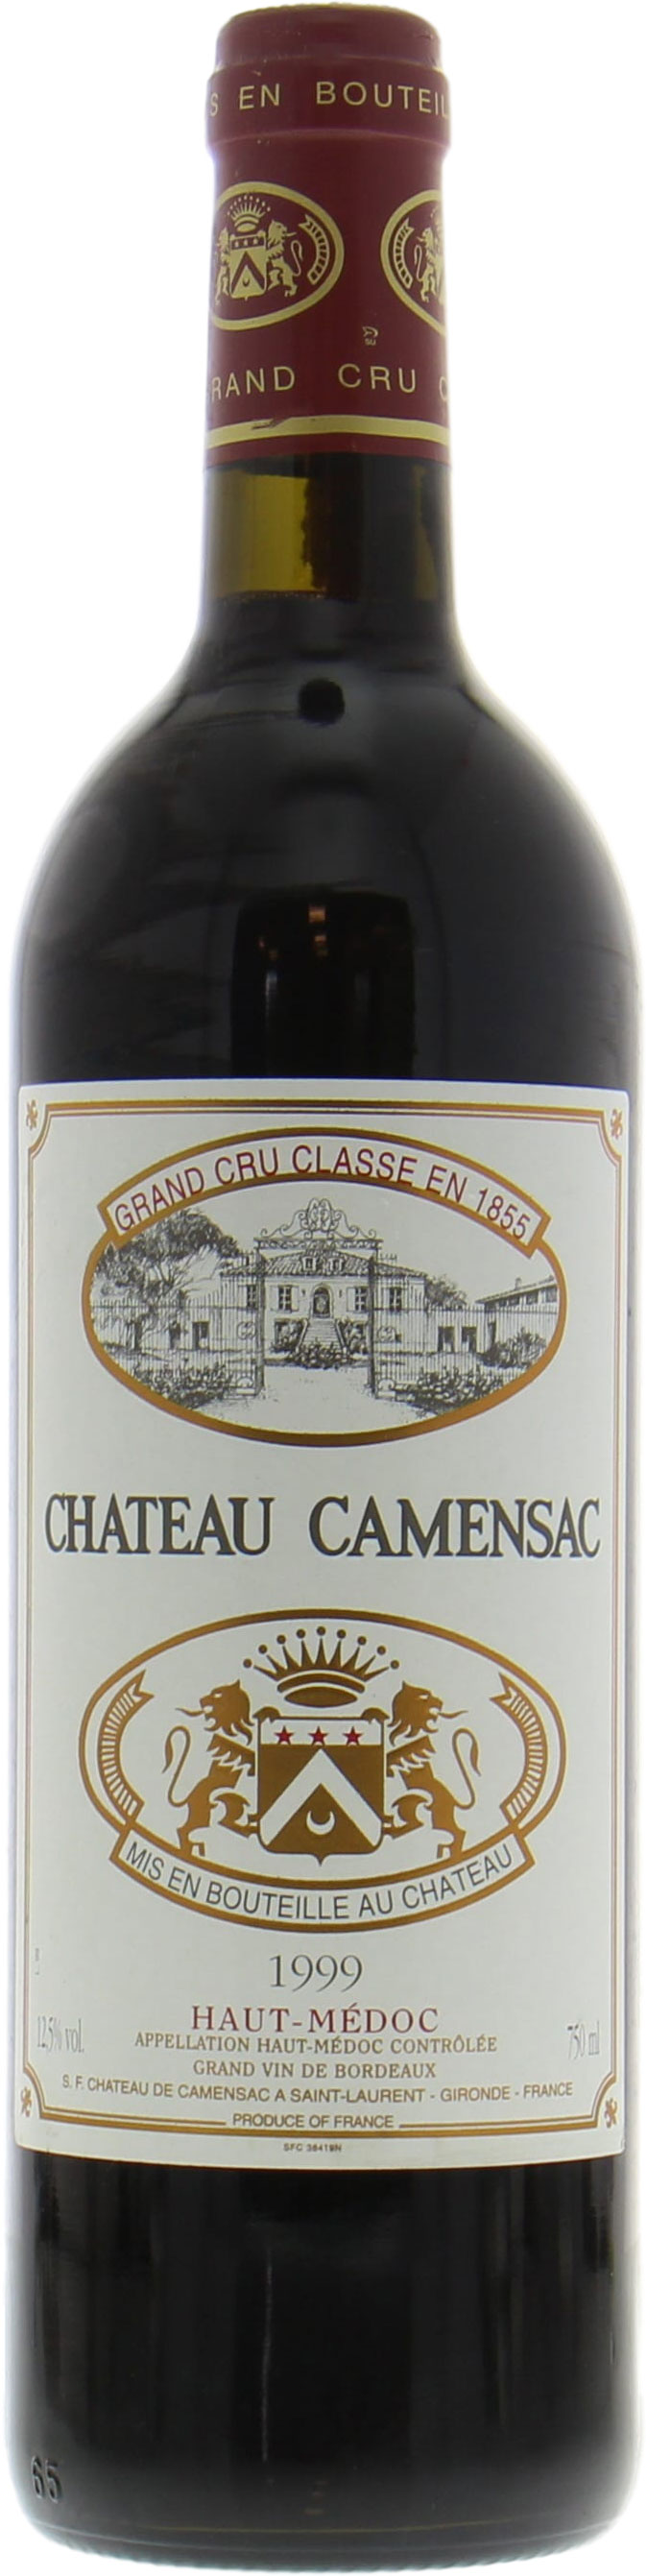 Chateau Camensac - Chateau Camensac 1999 From Original Wooden Case